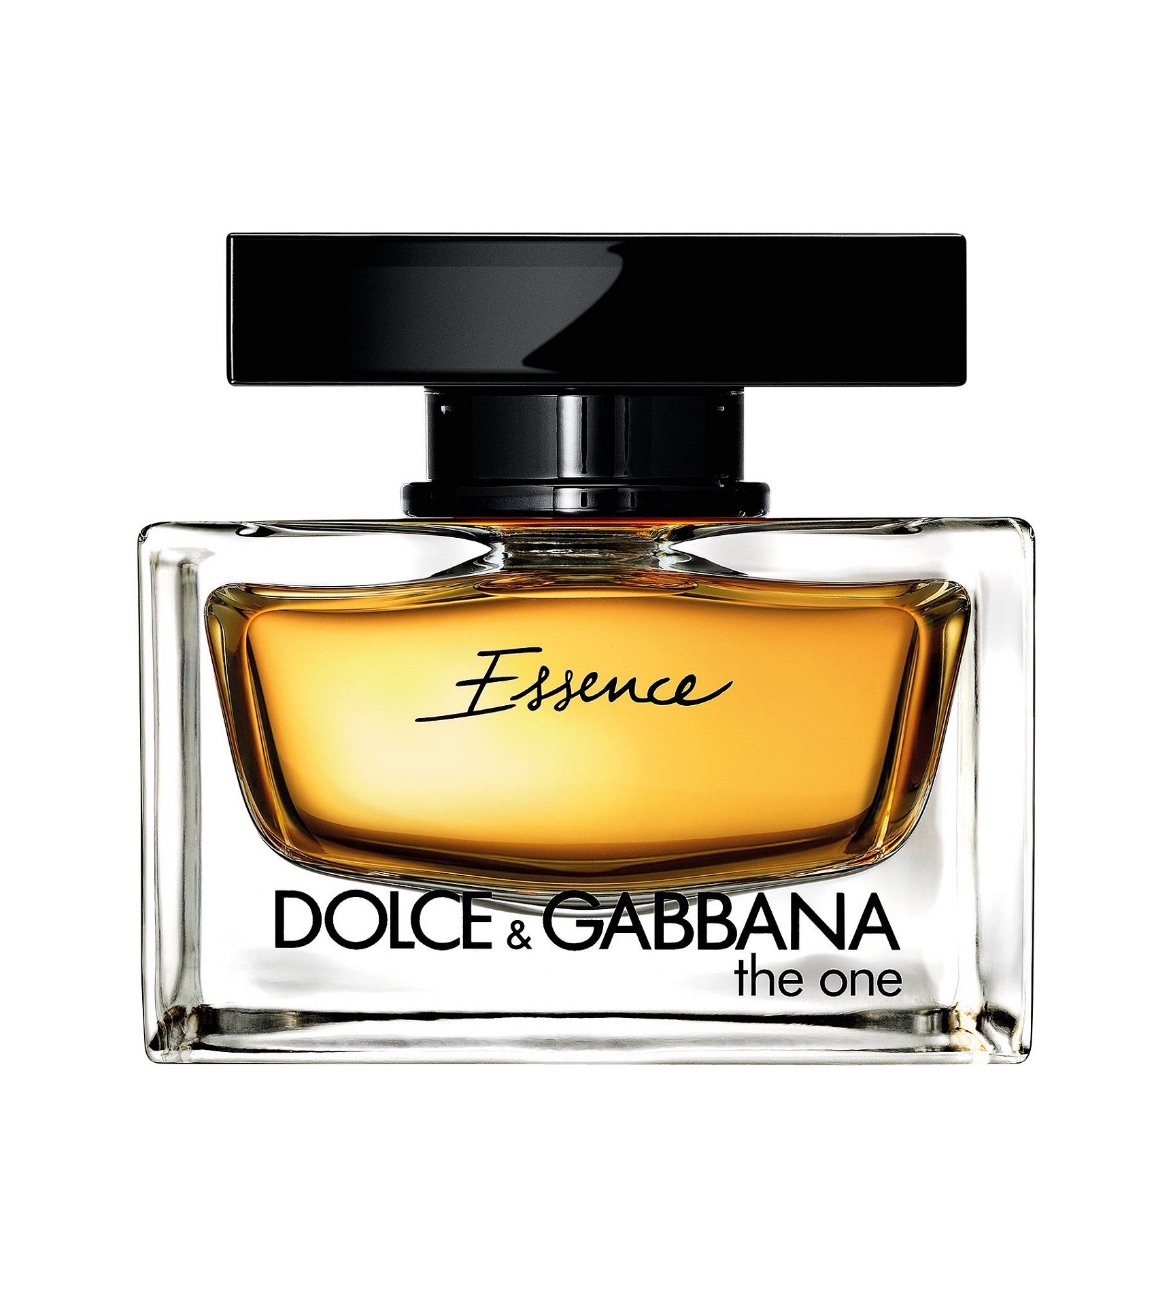 Dolce & Gabbana The One Essence Eau De Parfum 40ml